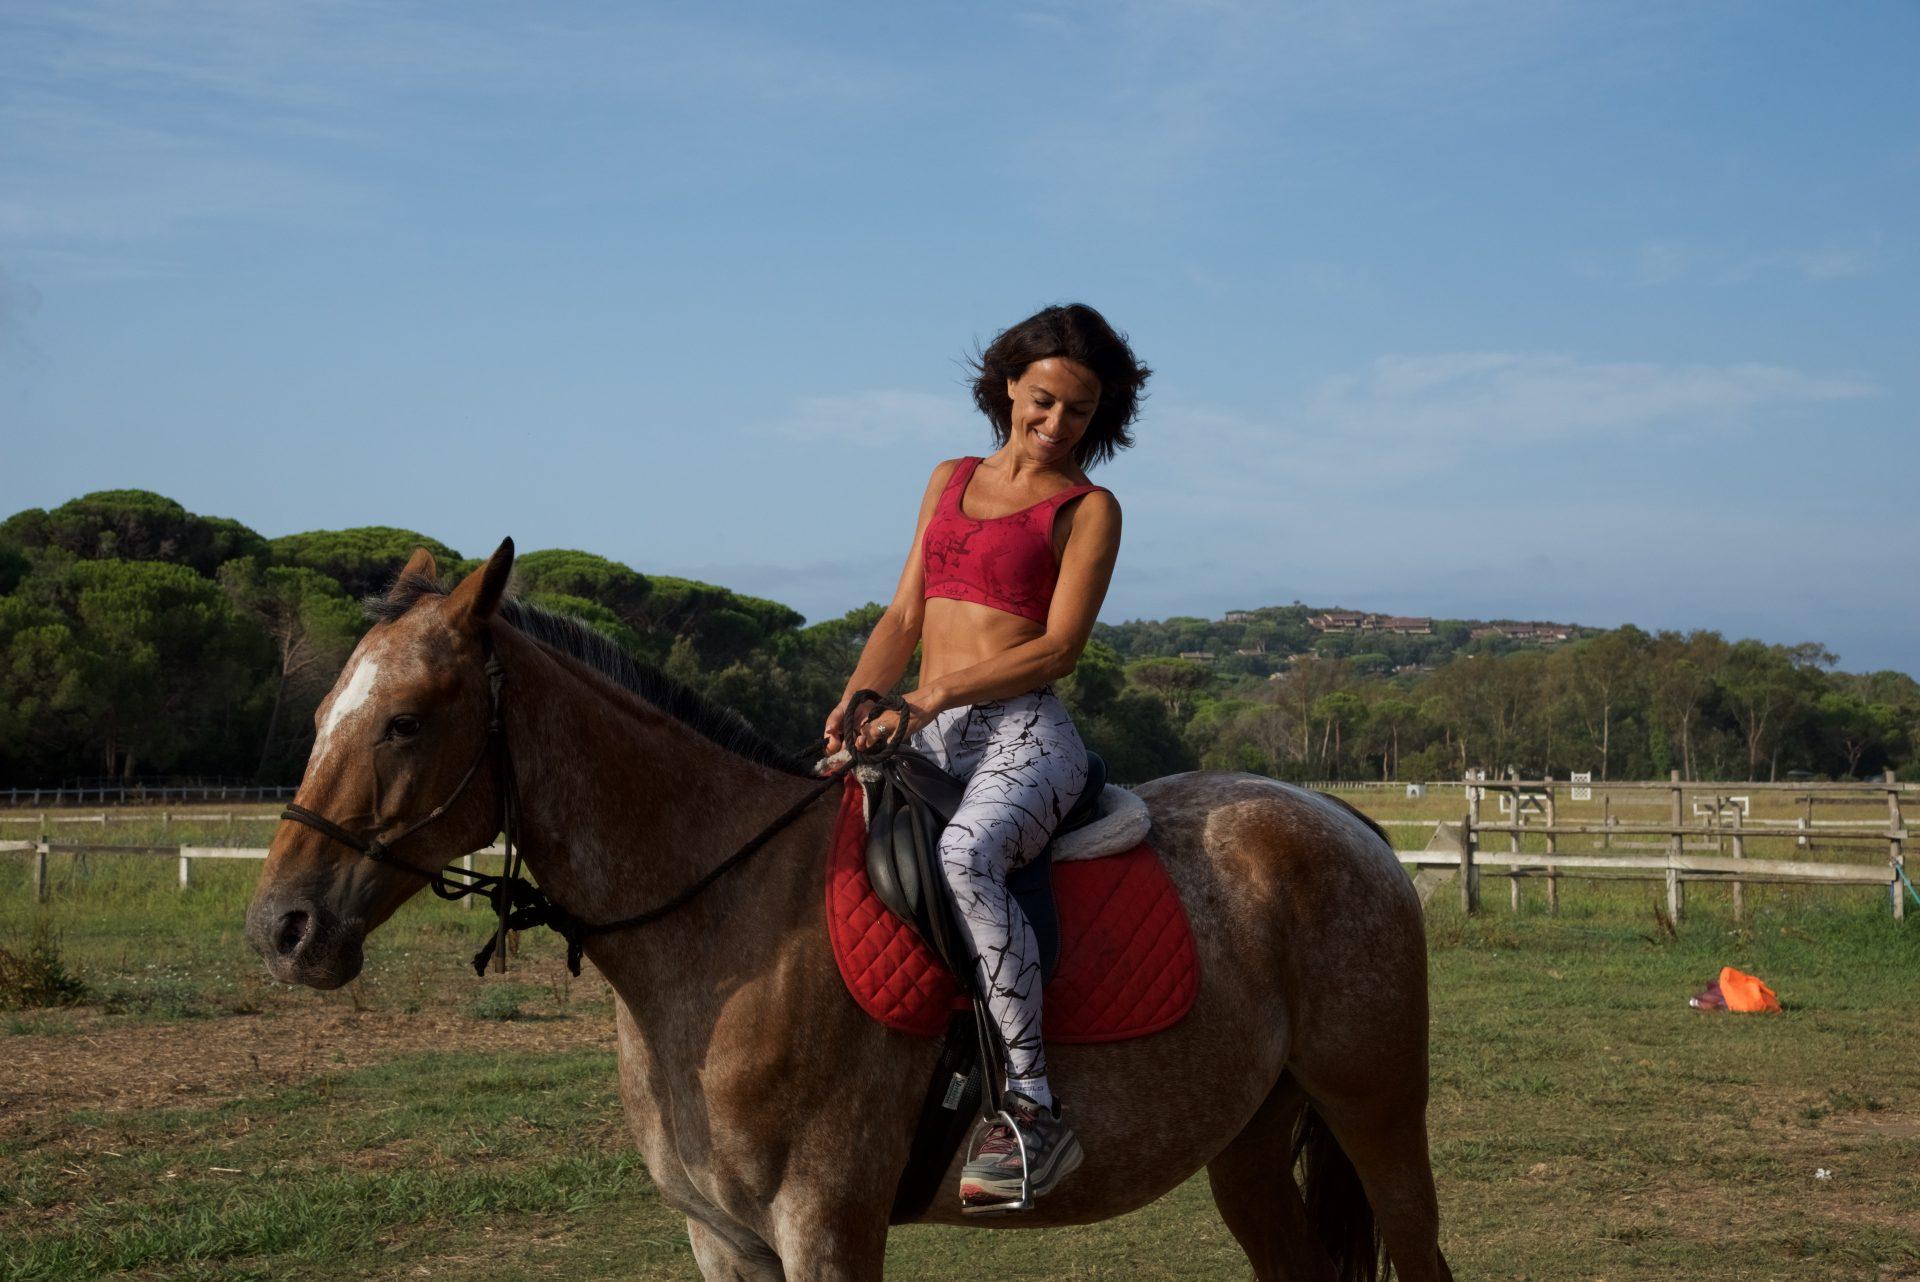 Punta ala horse riding odlo